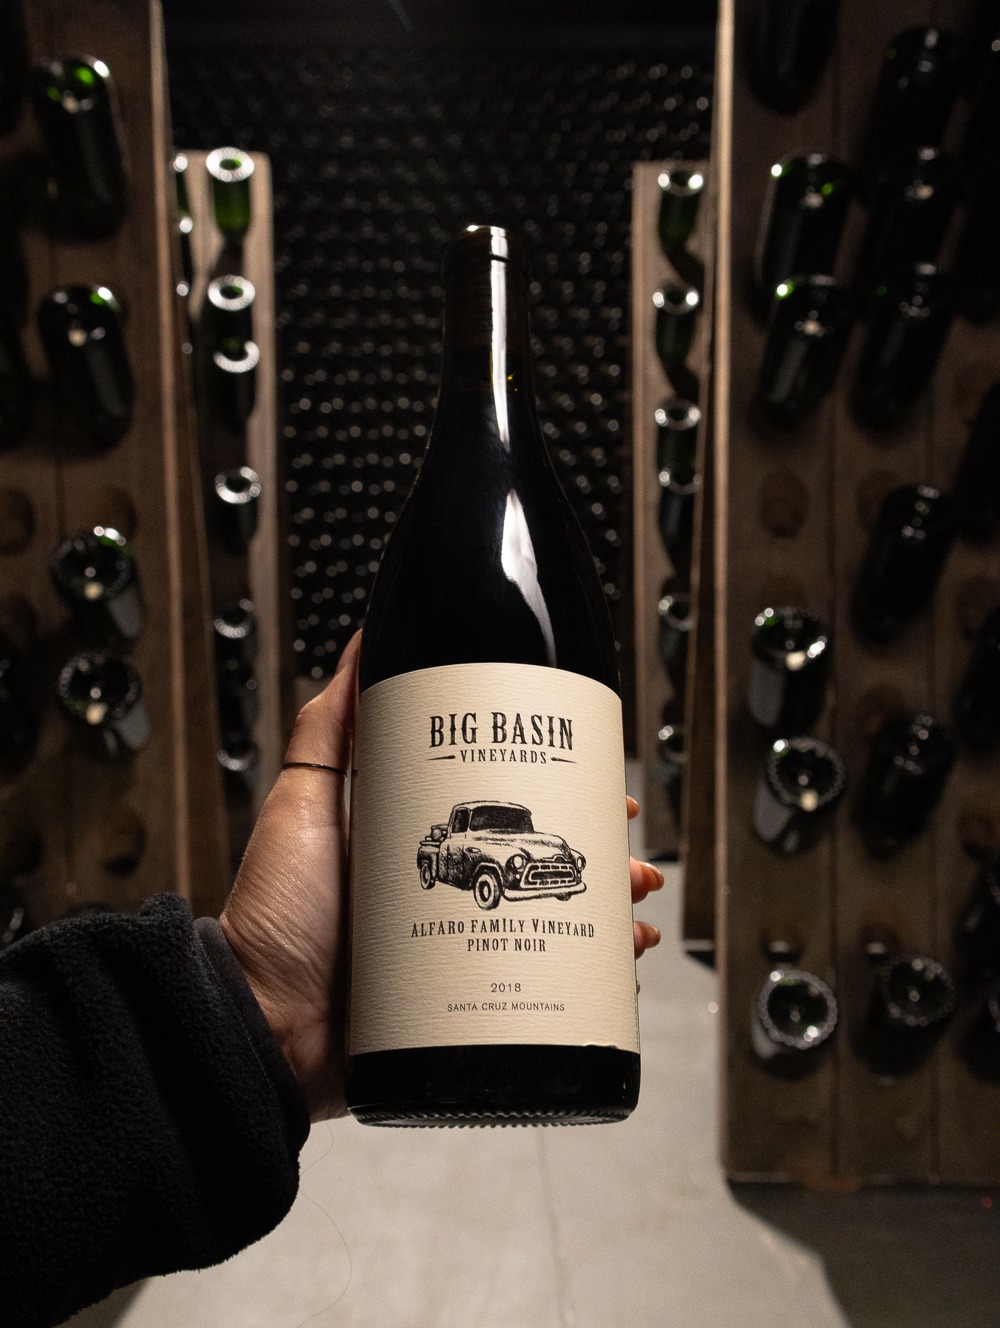 Big Basin Vineyards Pinot Noir Alfaro Family Vineyard Santa Cruz Mountains 2018